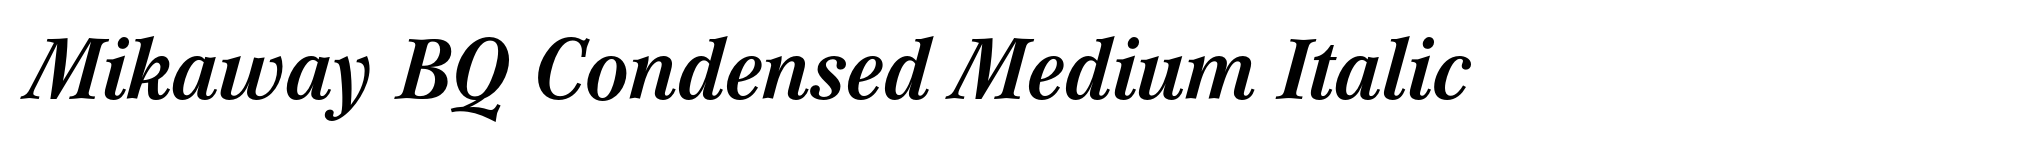 Mikaway BQ Condensed Medium Italic image